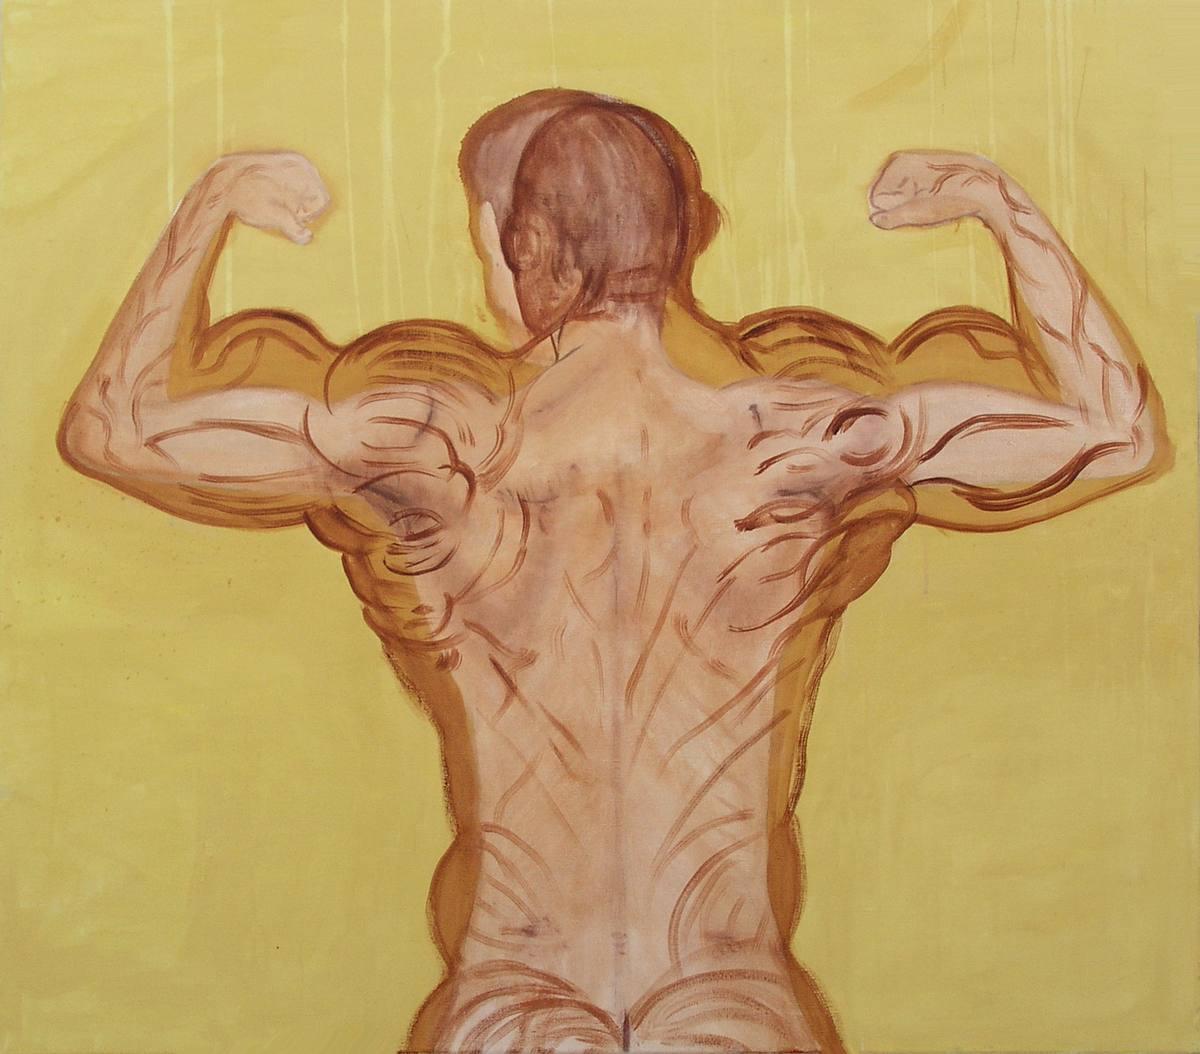 Jan Karpíšek - Graduation artwork: Back (Time of Bodybuilder), oil on canvas, 110x125 cm, 2005